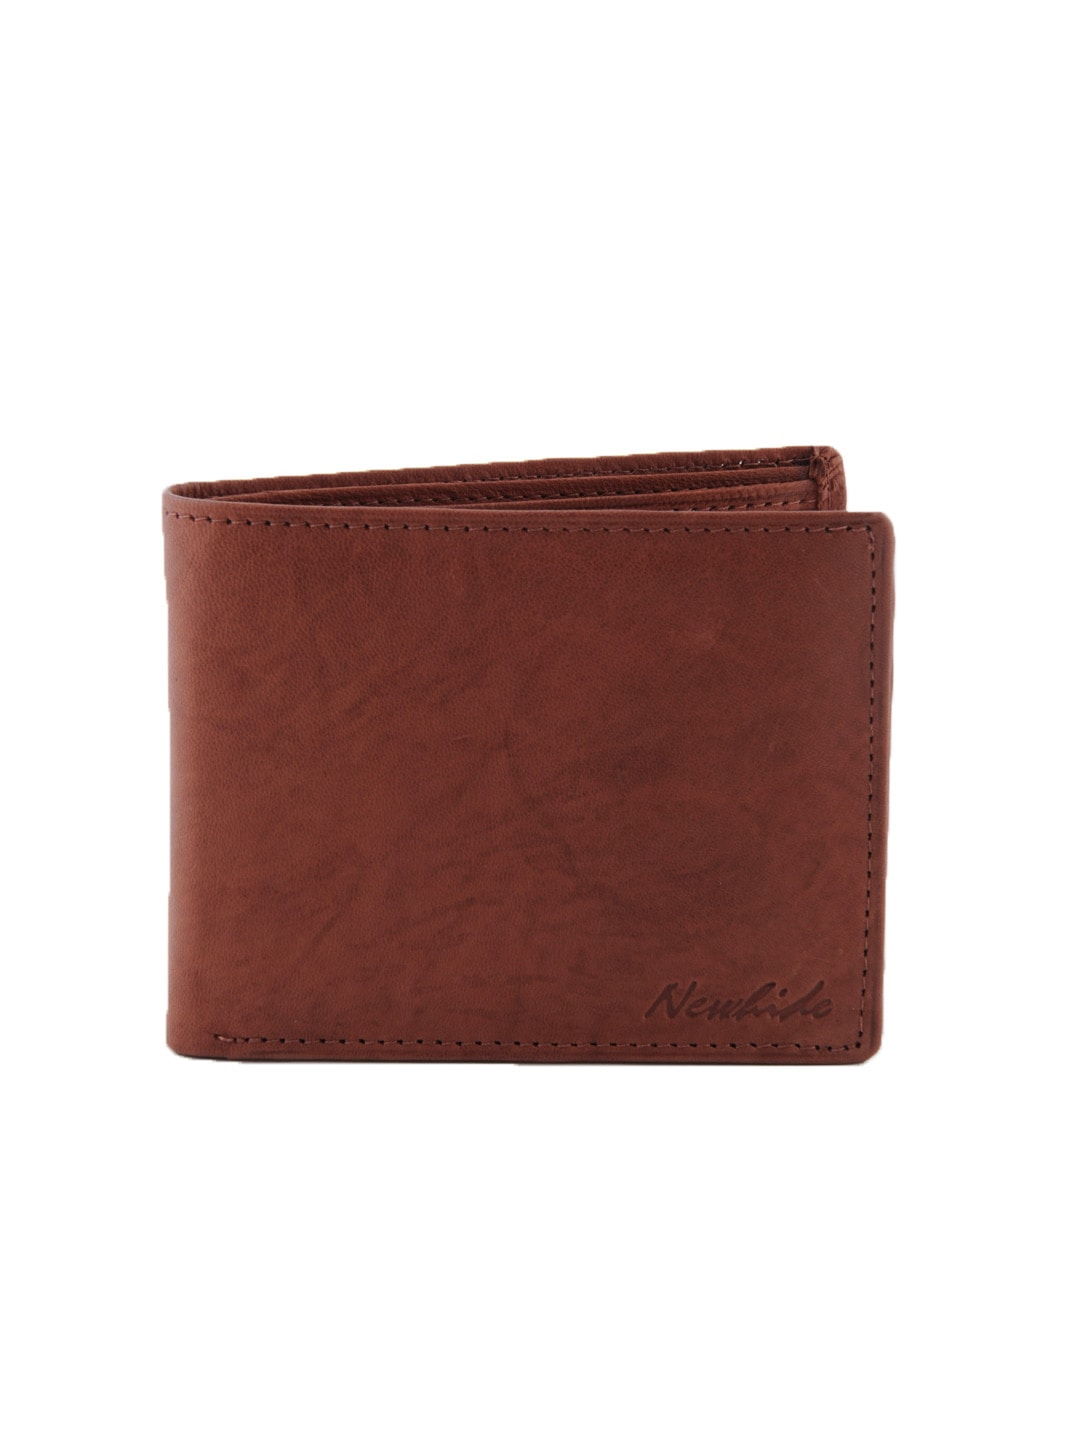 Newhide Brown Men Antique Wallet